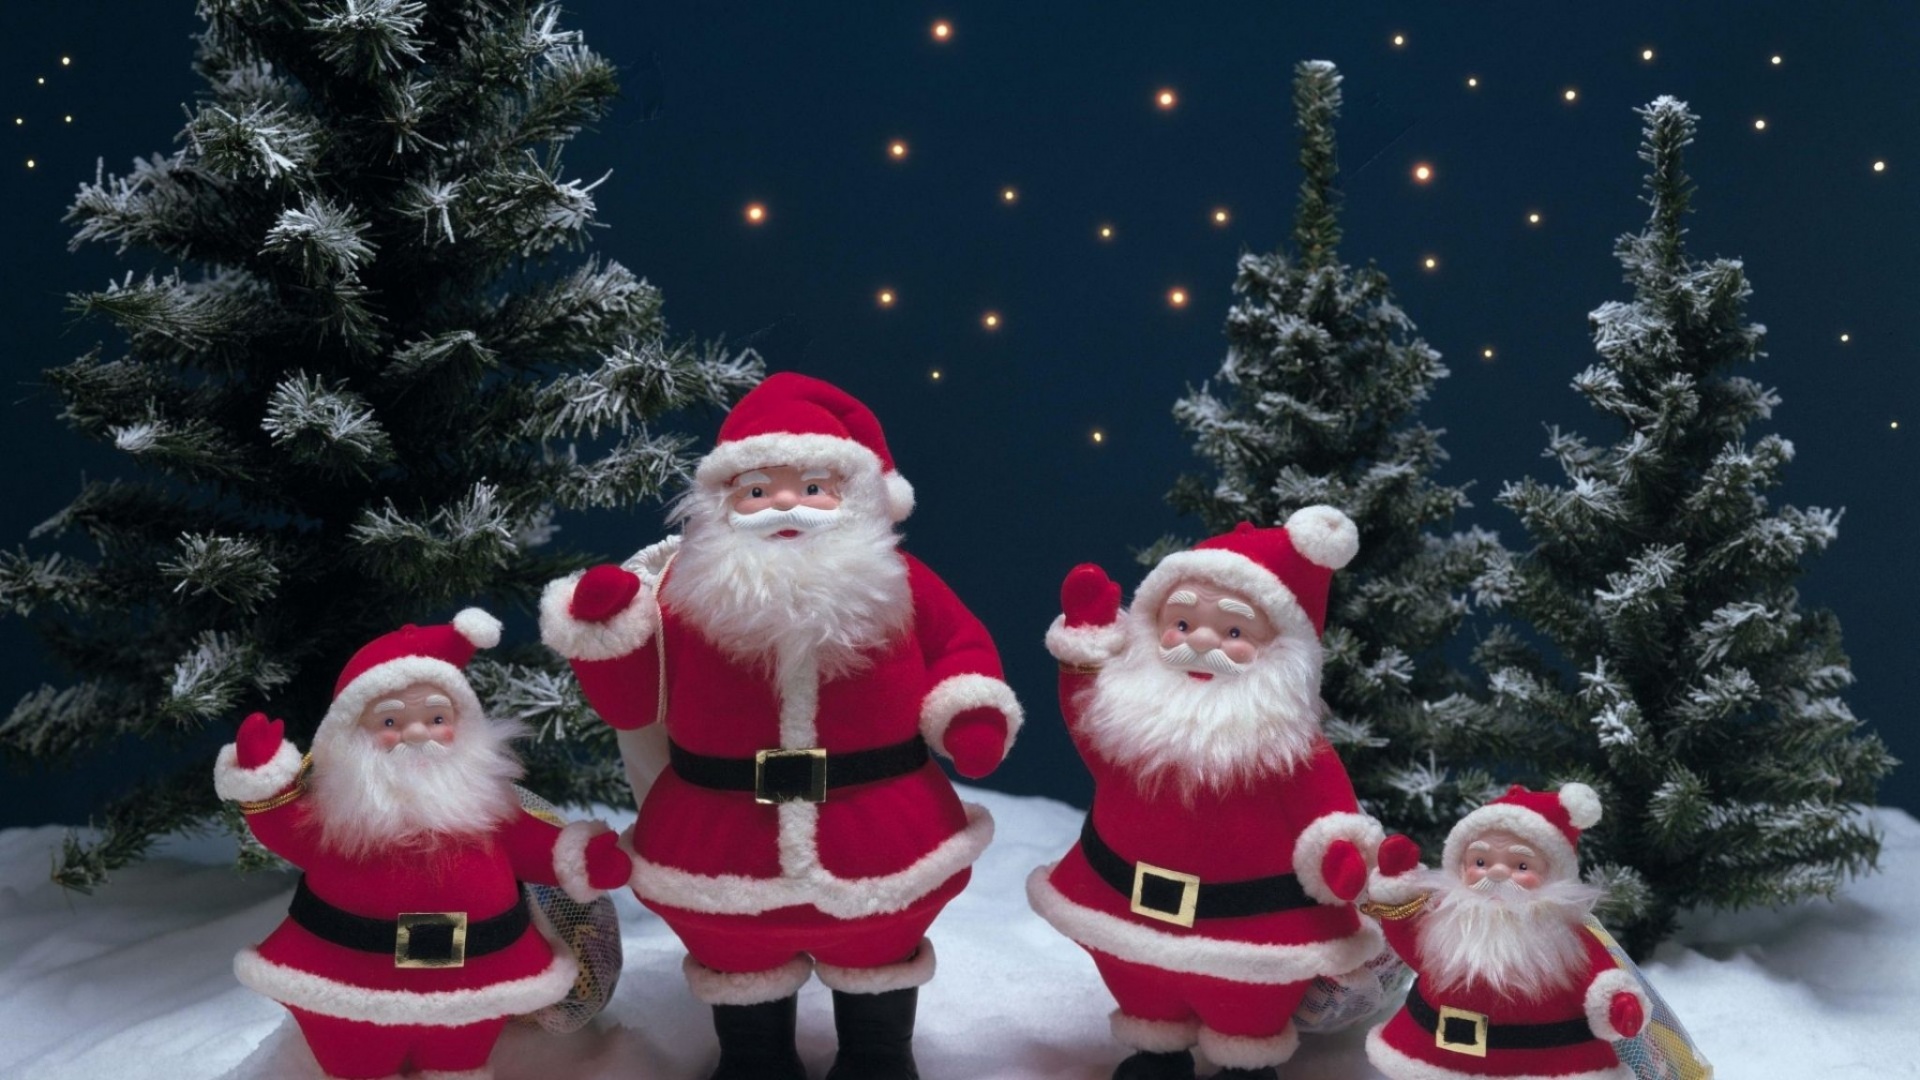 Santa Claus Gifts Christmas Trees Stars Snow